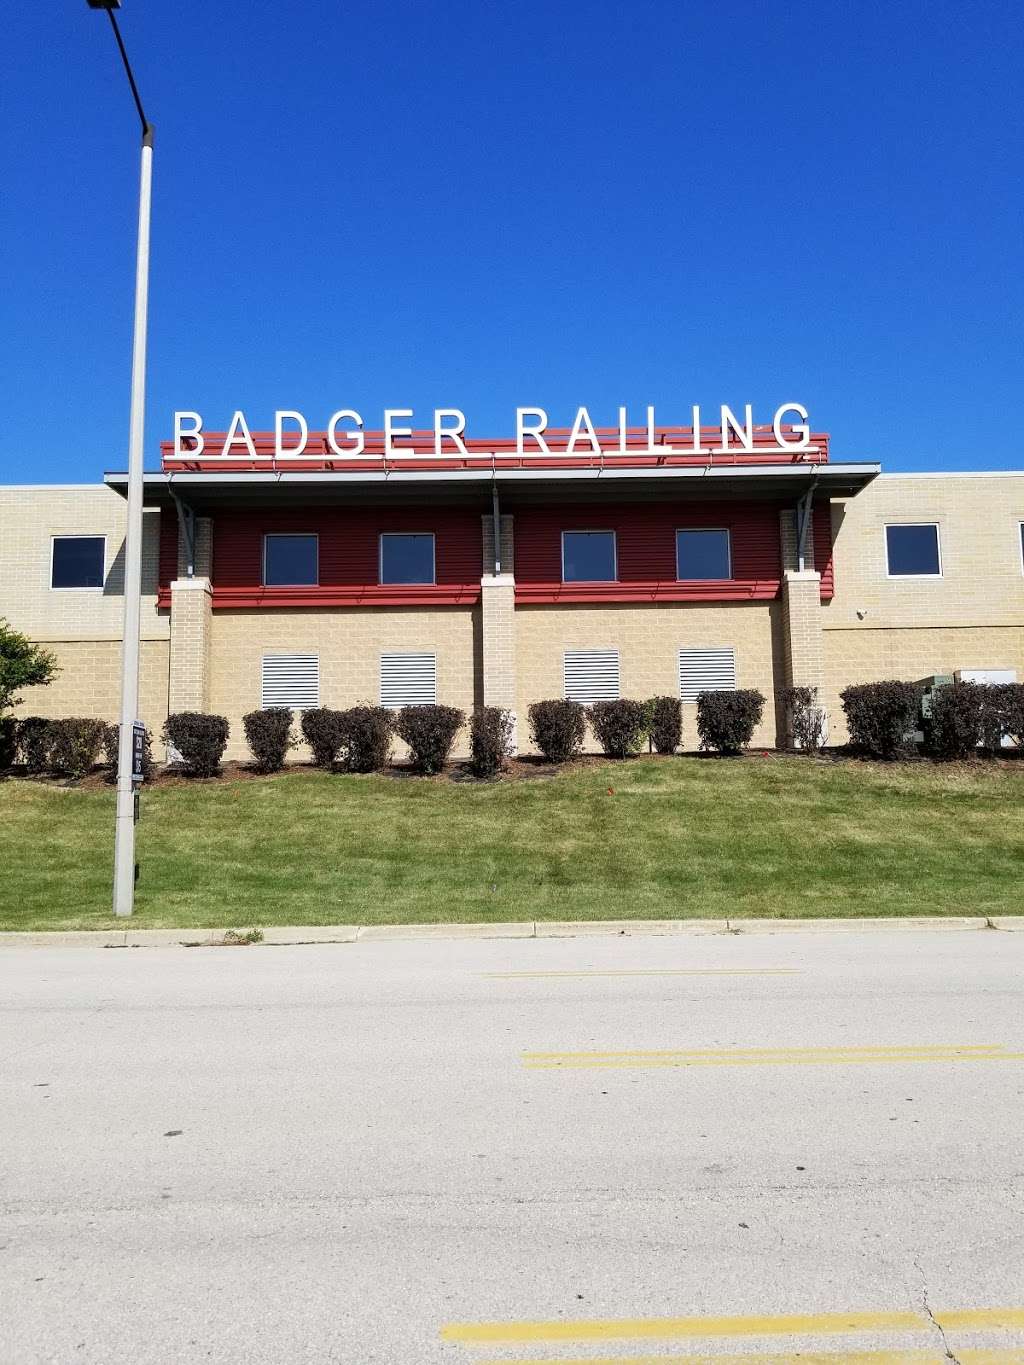 Badger Railing | 3880 W Milwaukee Rd, Milwaukee, WI 53208 | Phone: (414) 672-6090